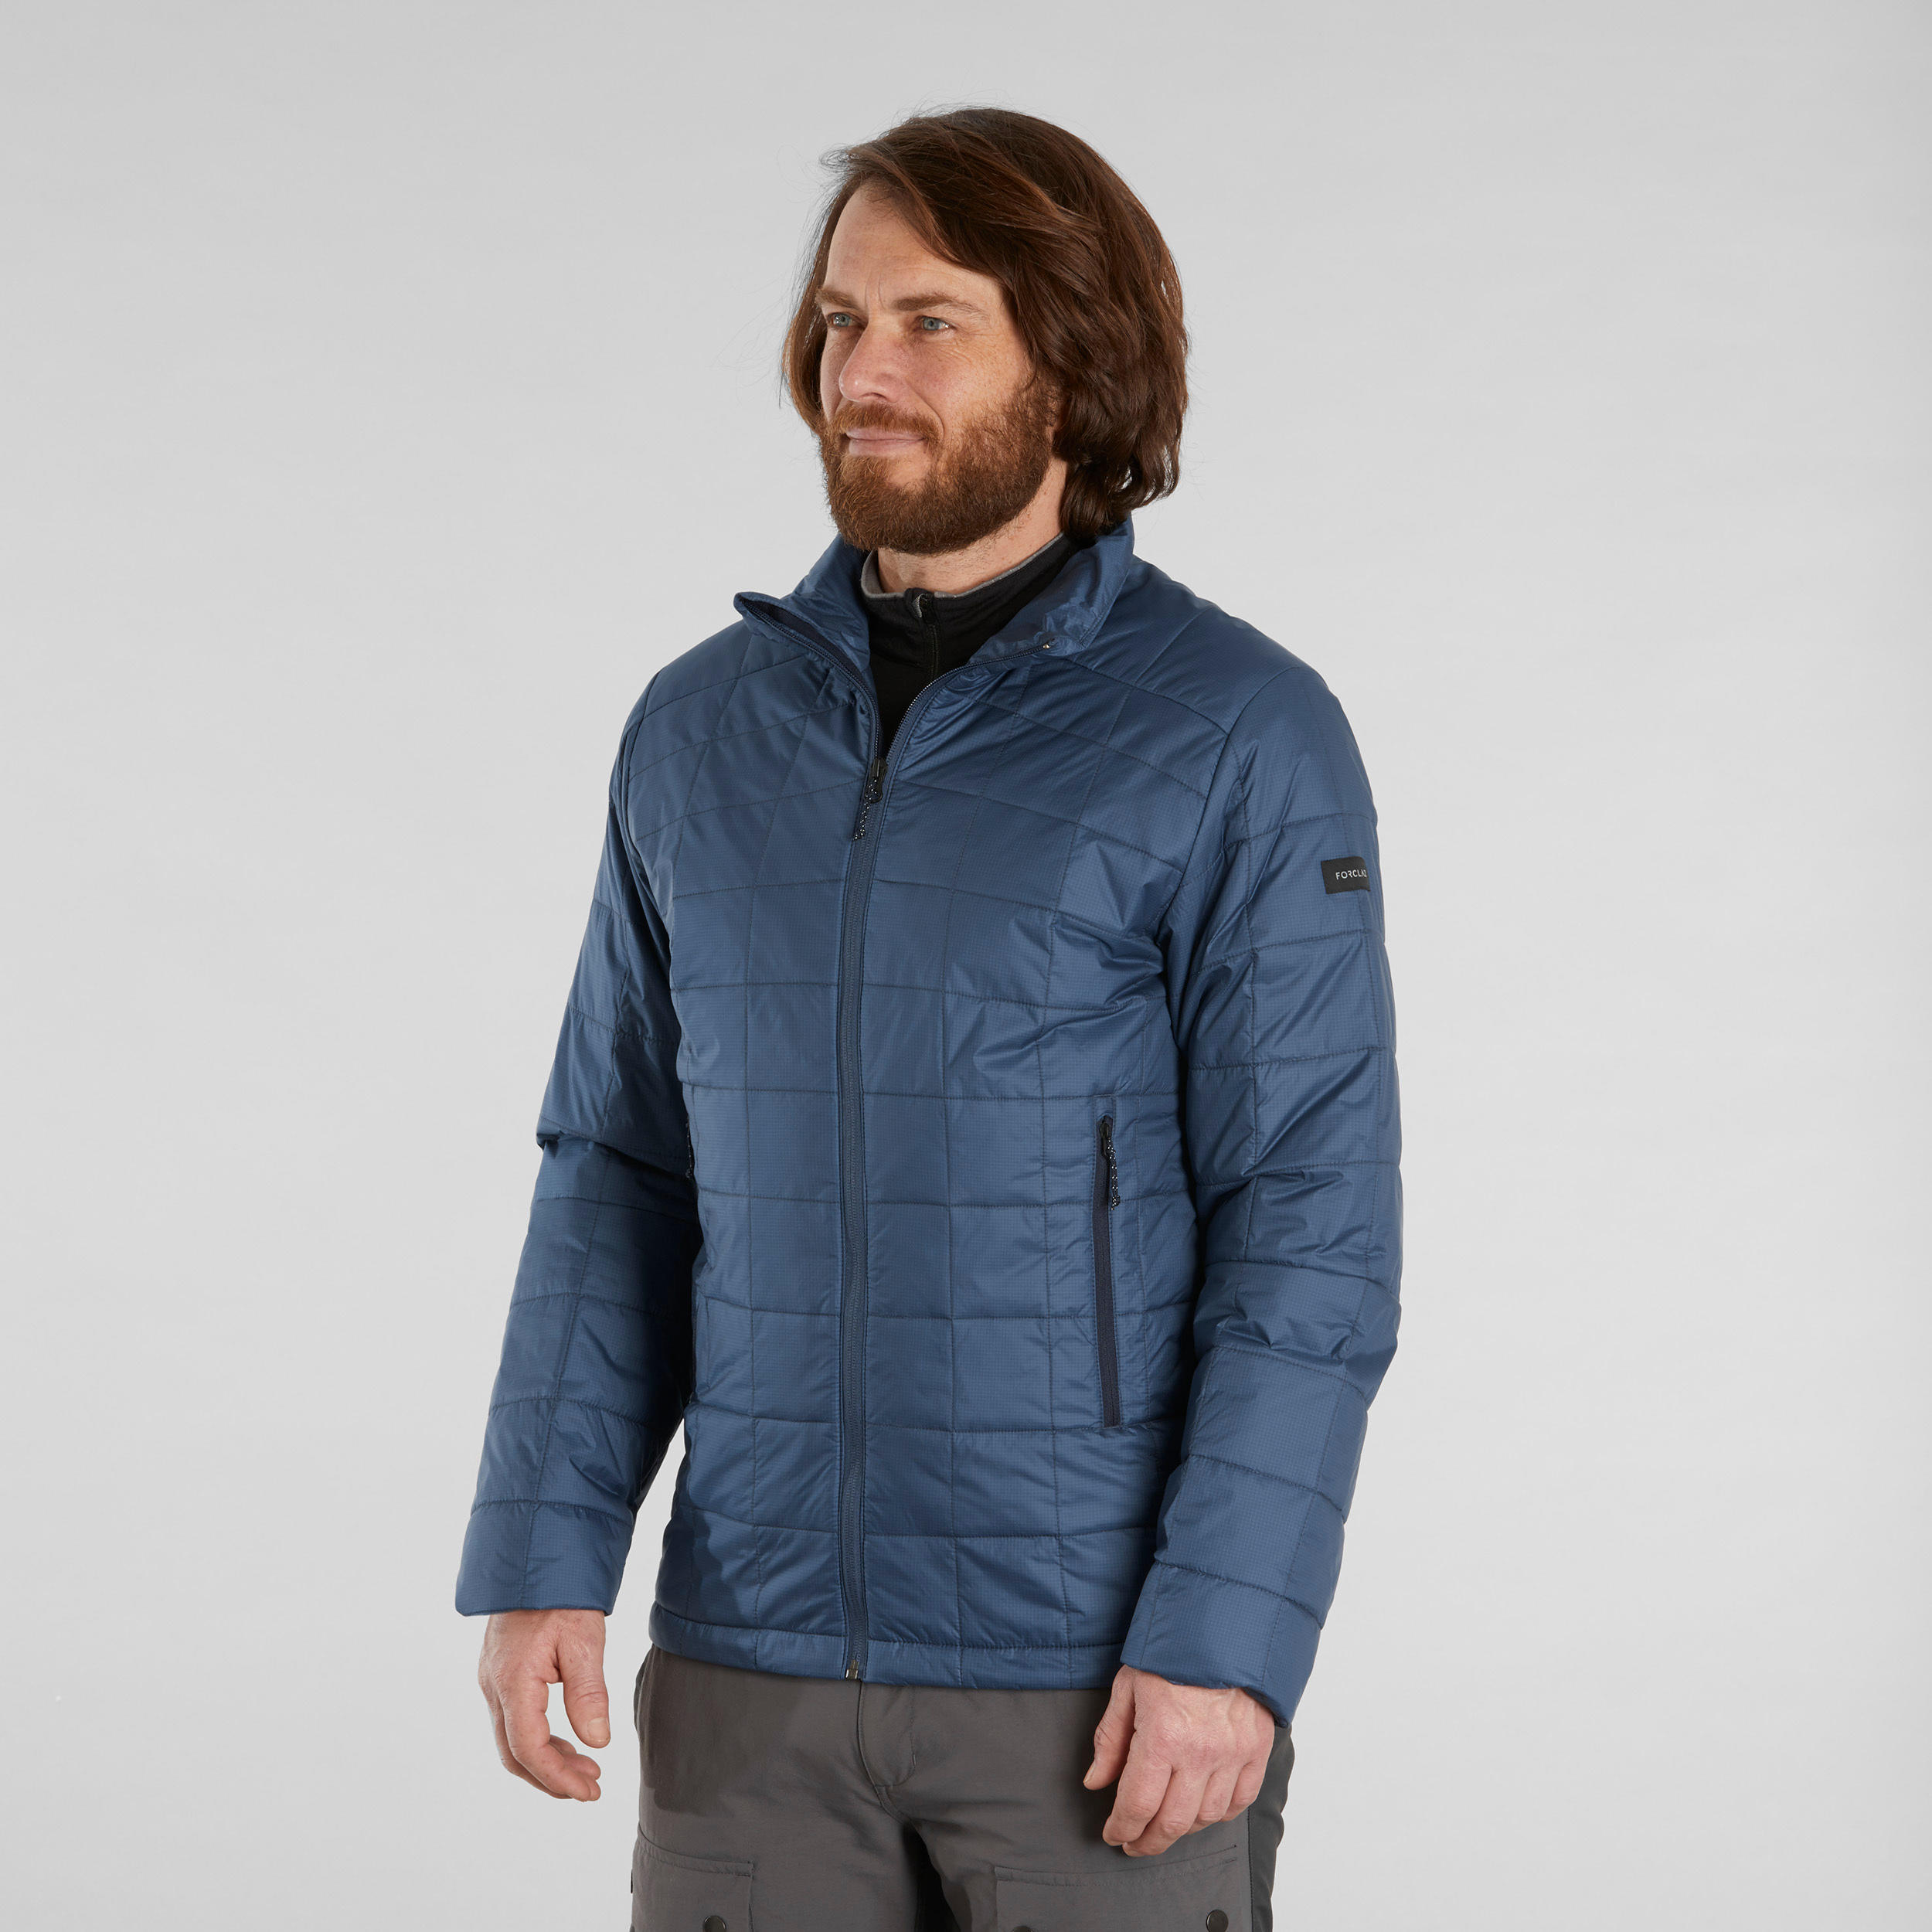 FORCLAZ Men’s mountain trekking synthetic padded jacket - MT100 -5°C